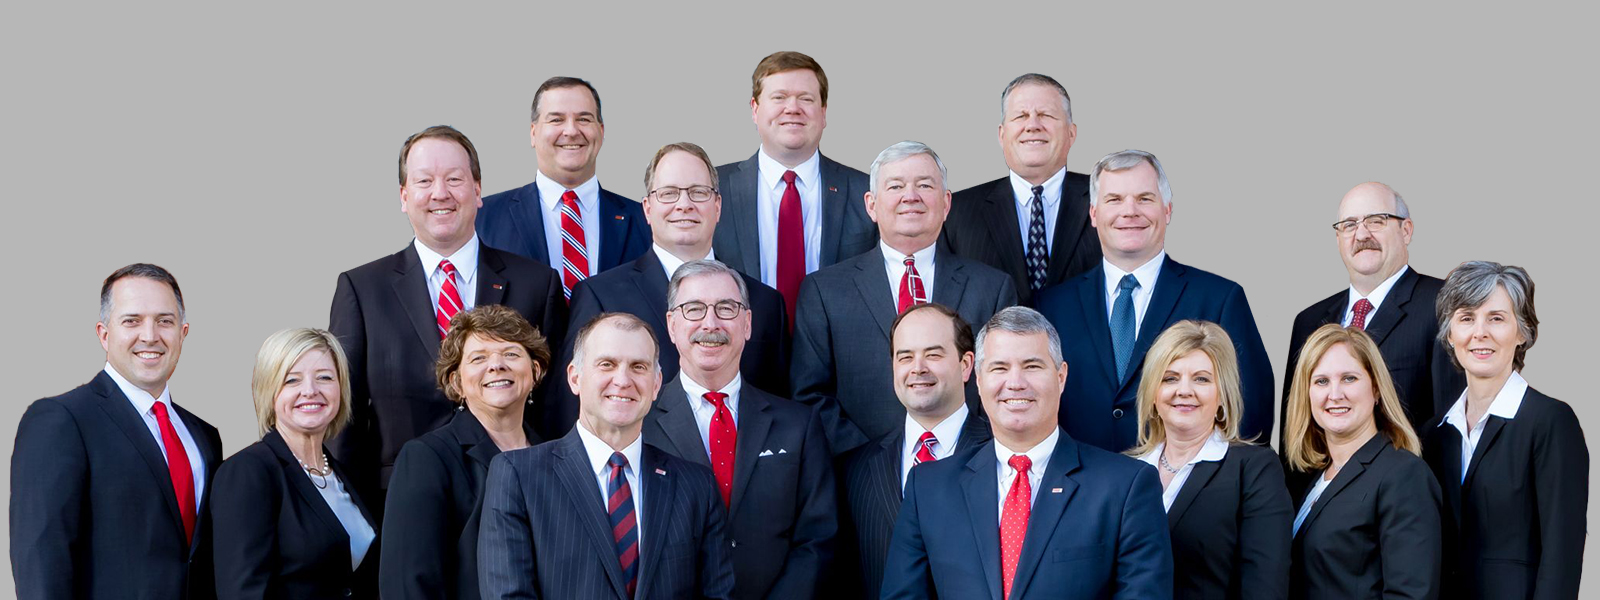 Executive group photo